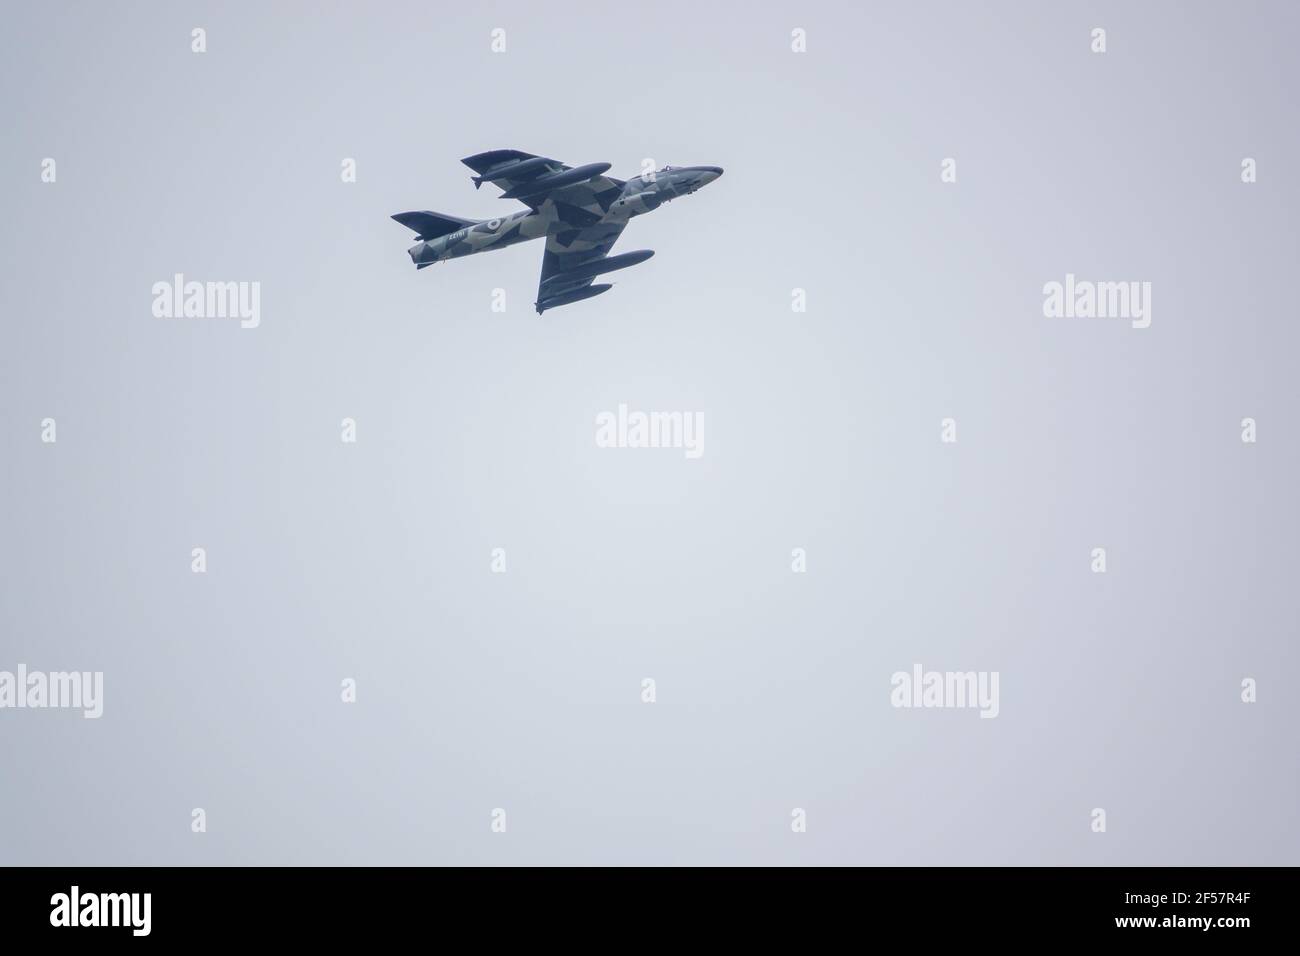 ZZ191 (ex G-HHAD, G-BWFS, J-4058) F.58 hawker hunter jet fighter in low level flight, grey sky Stock Photo